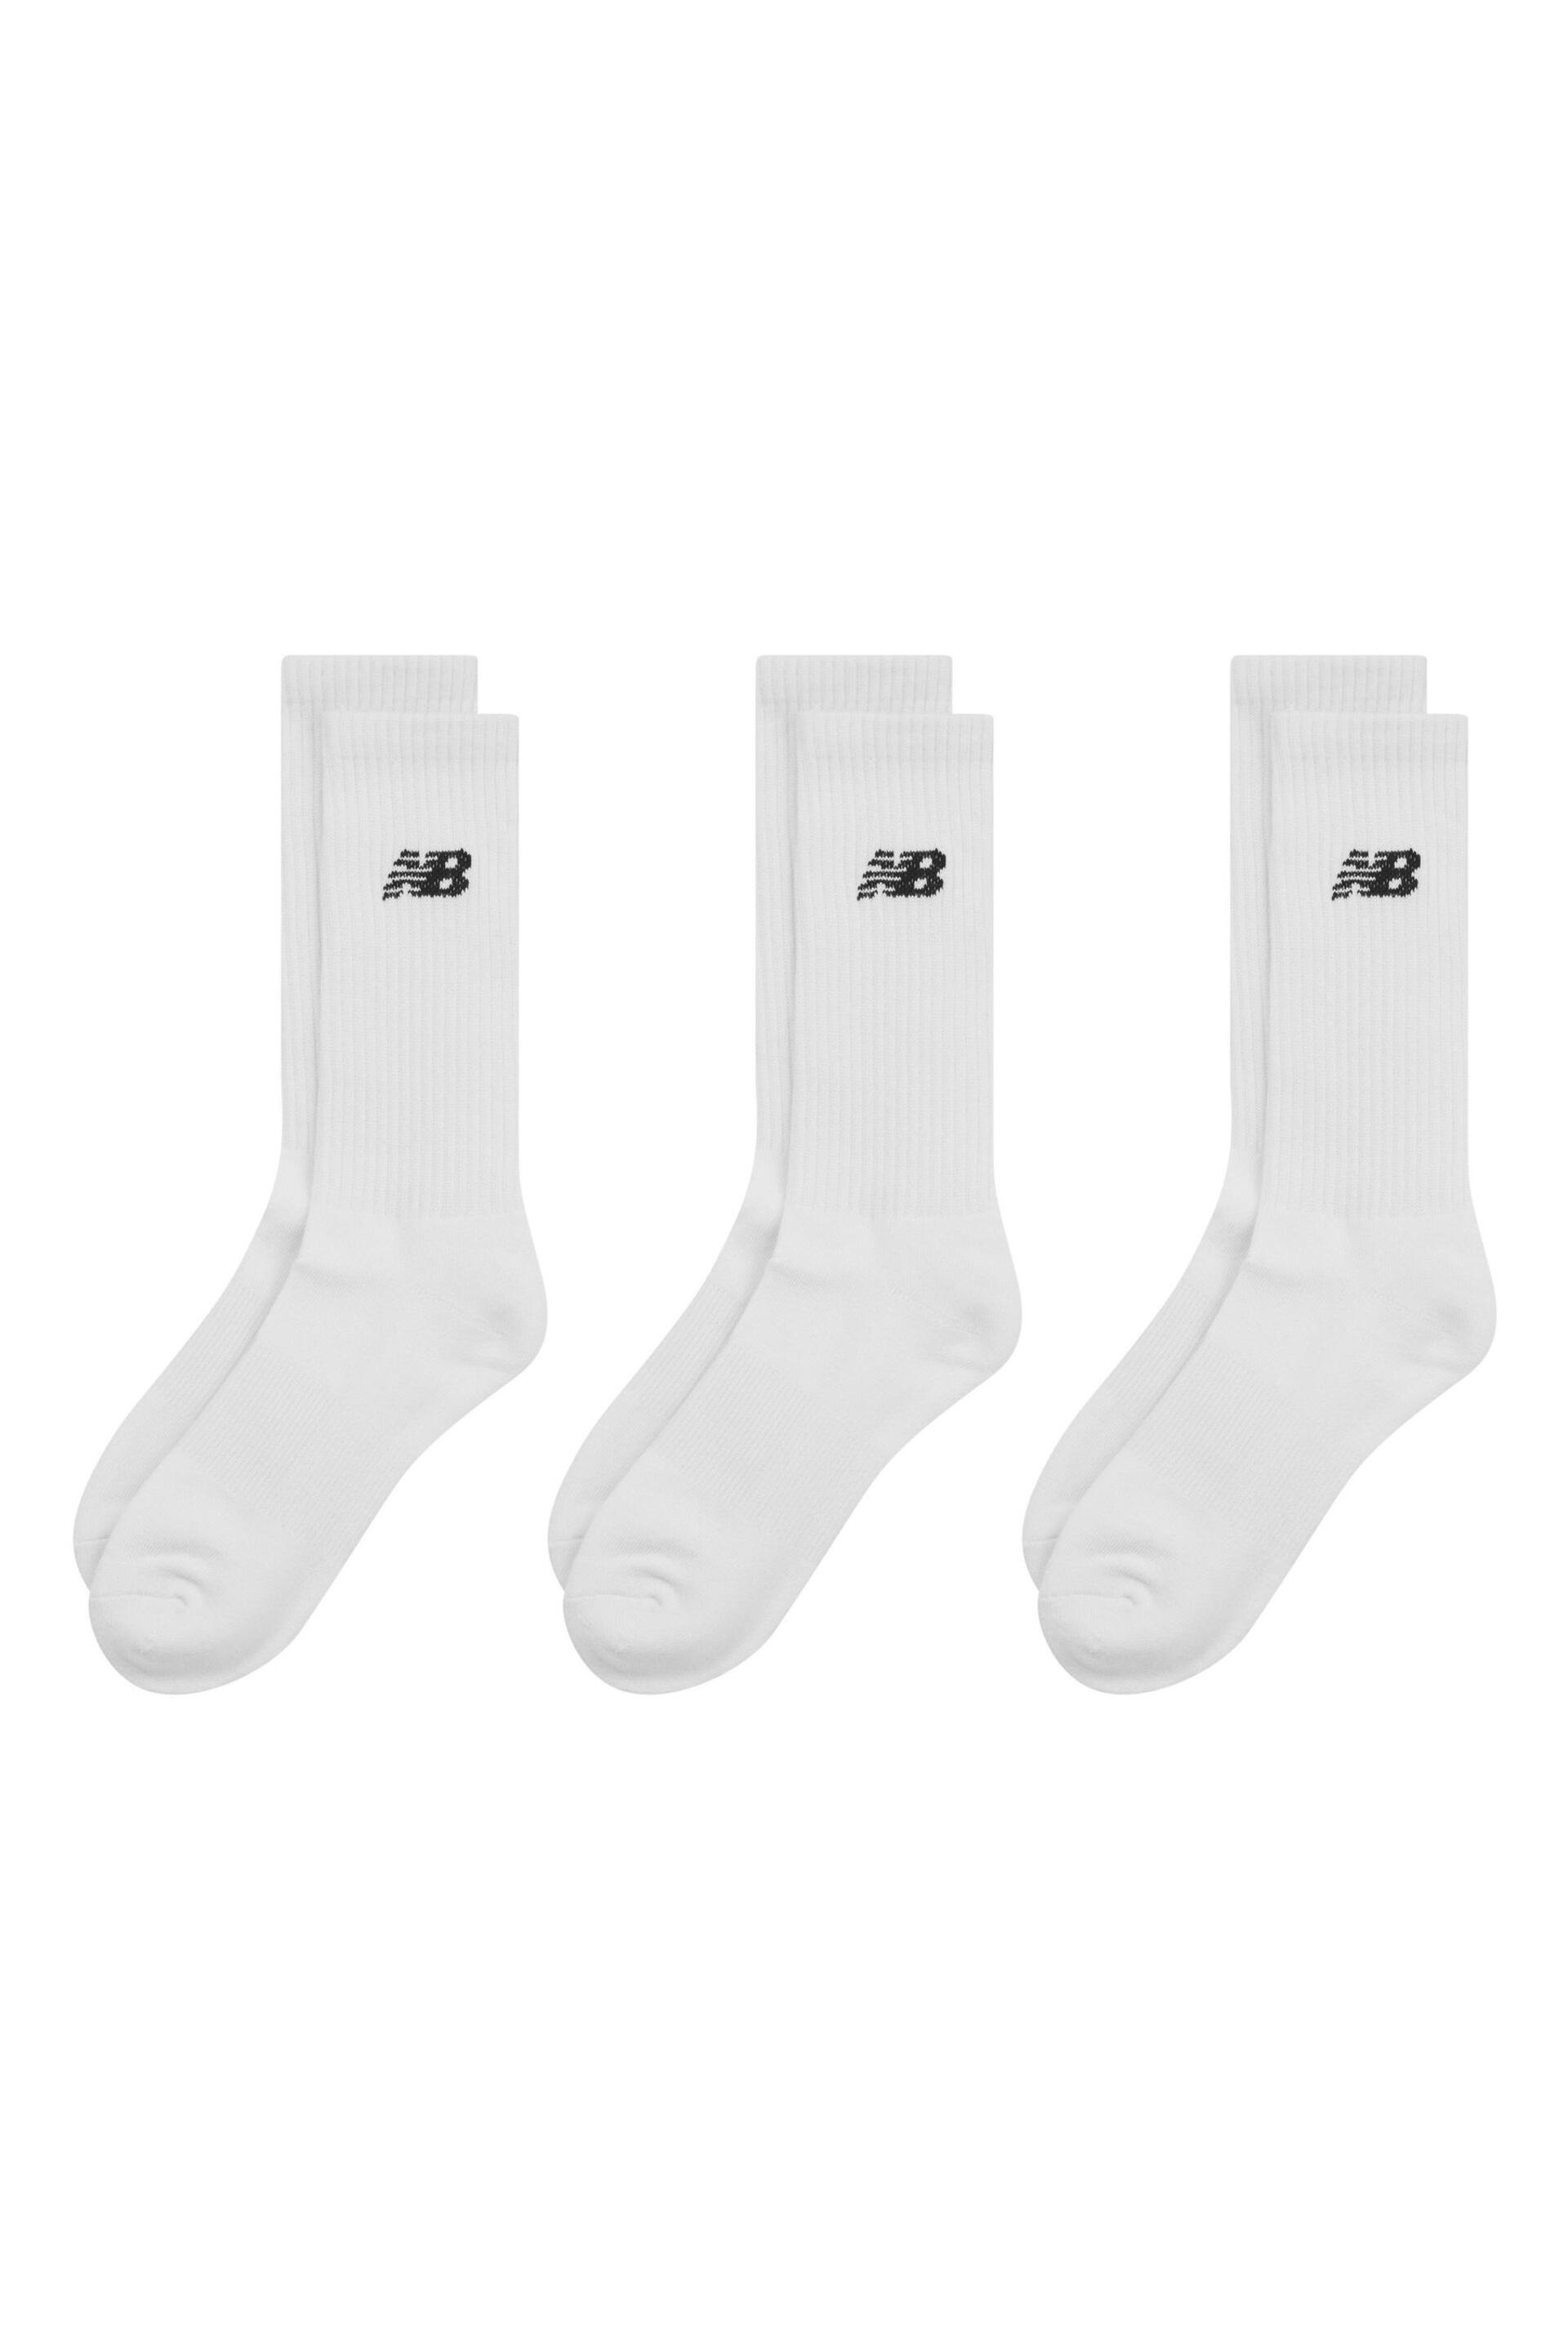 New Balance White Everyday Crew Socks - Image 1 of 3